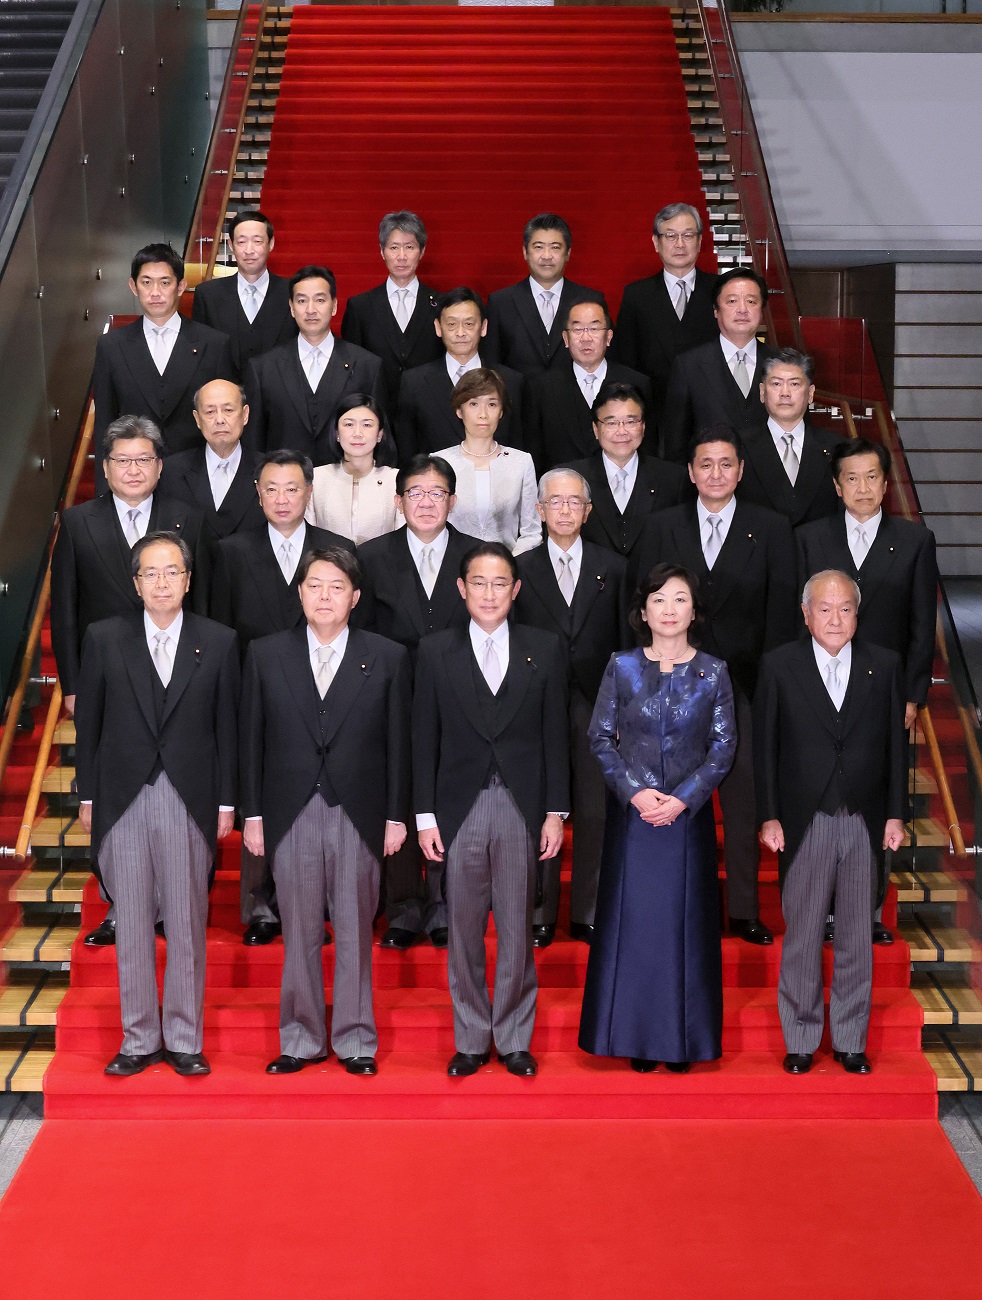 Inauguration of the Second Kishida Cabinet